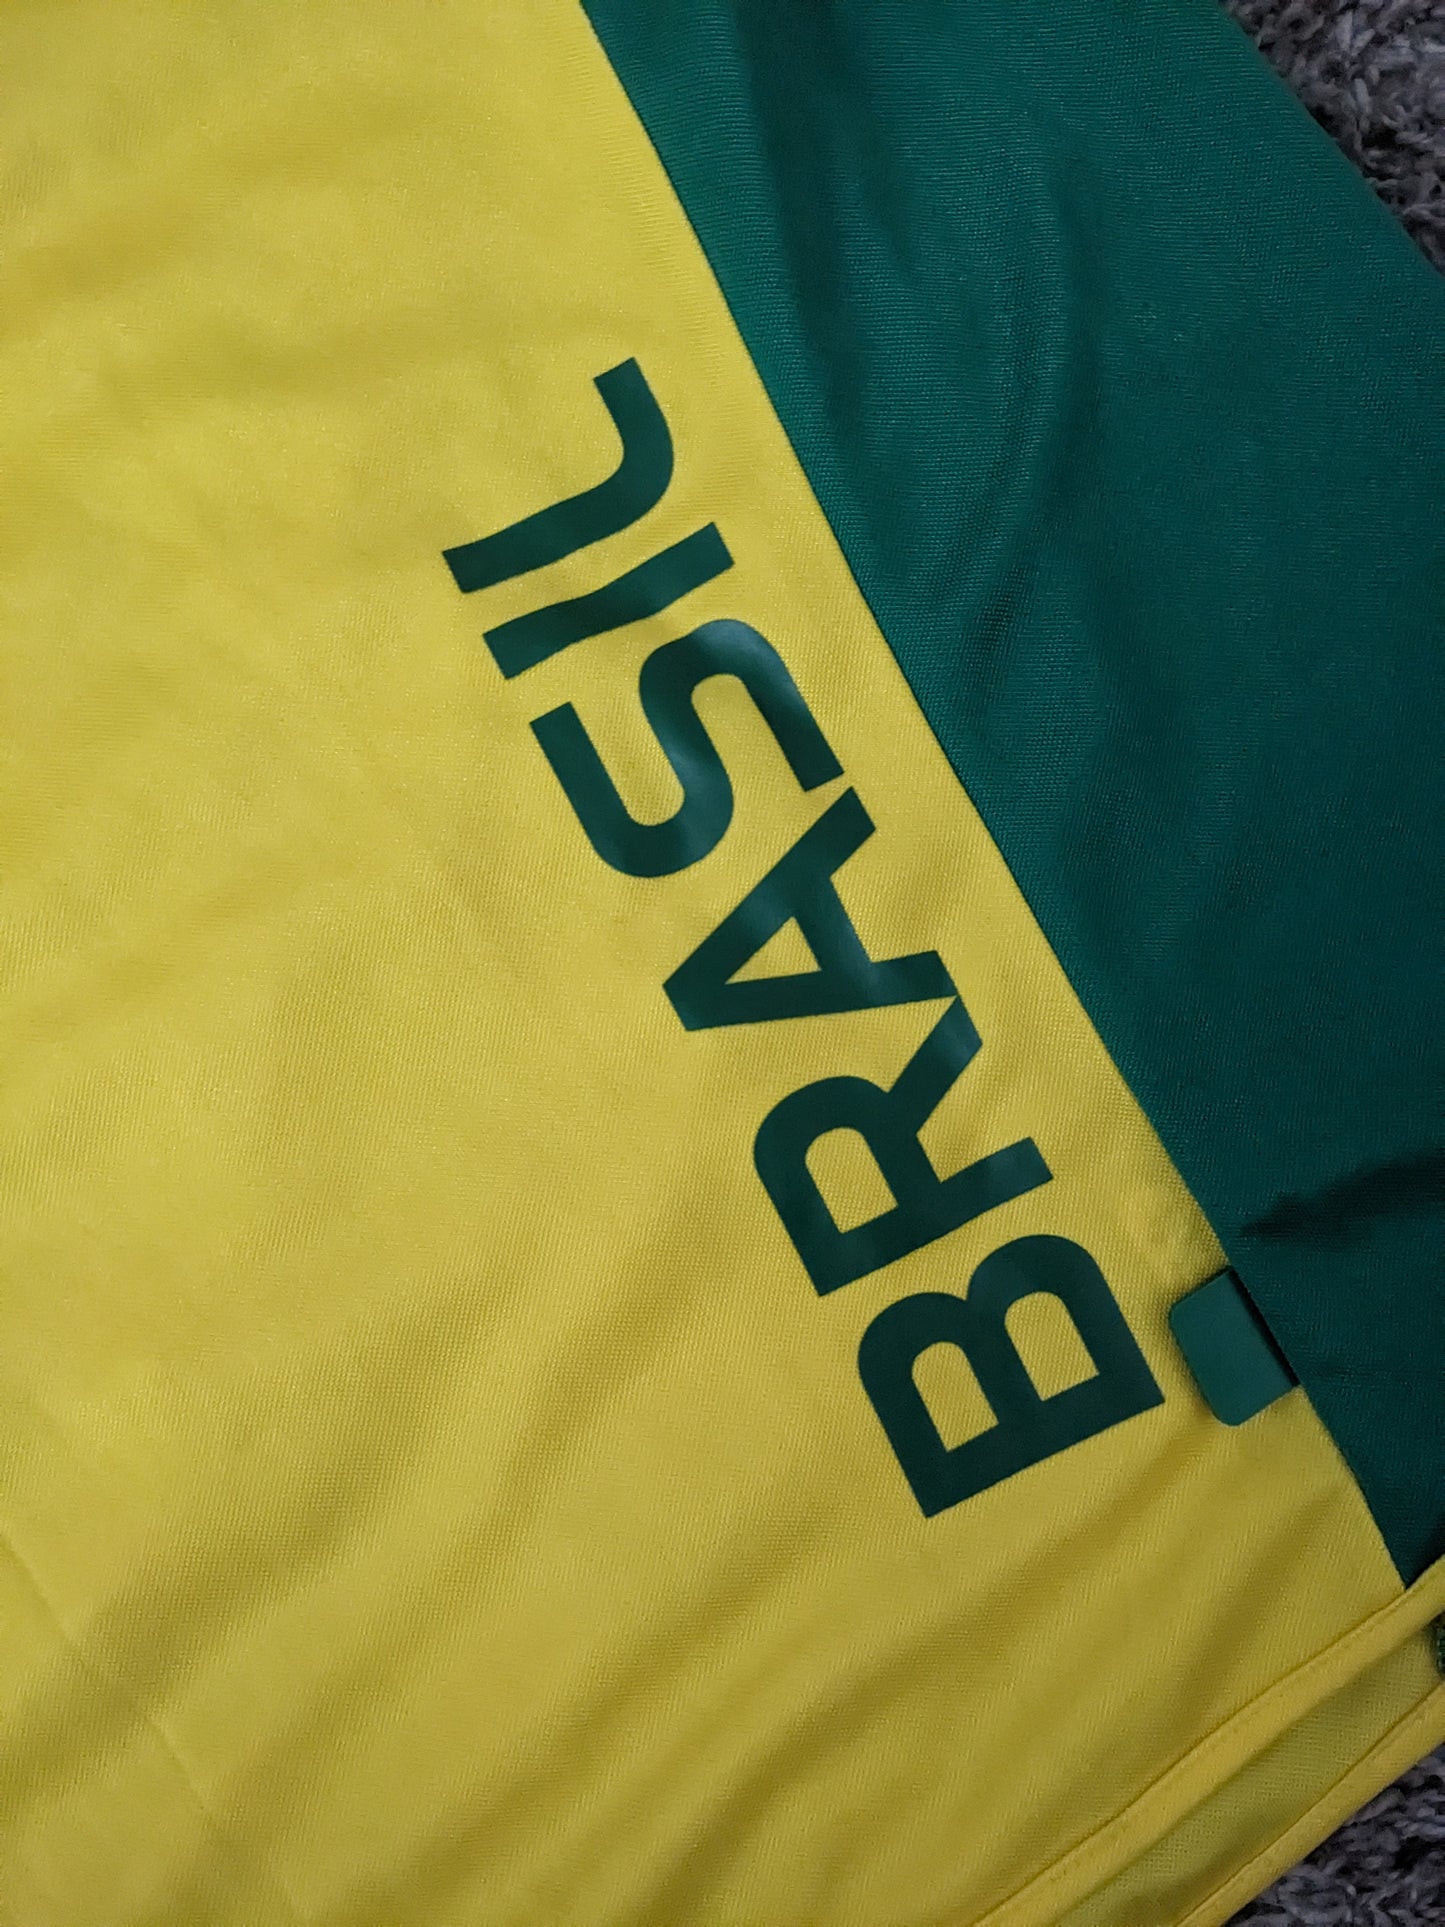 Brazil 2006 FIFA World Cup Germany (XXL)